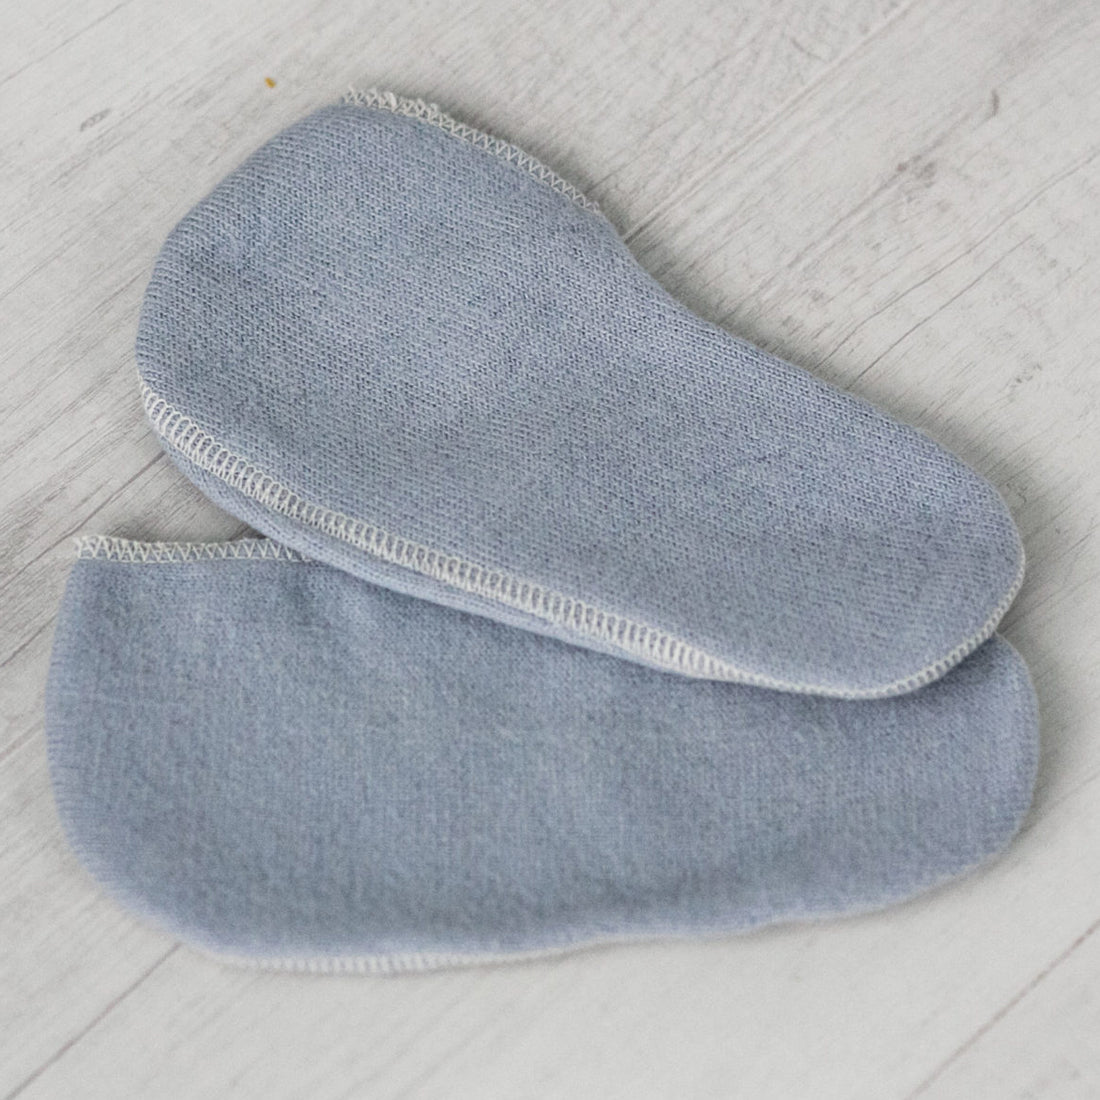 LANACare Footlets in Soft Organic Merino Wool